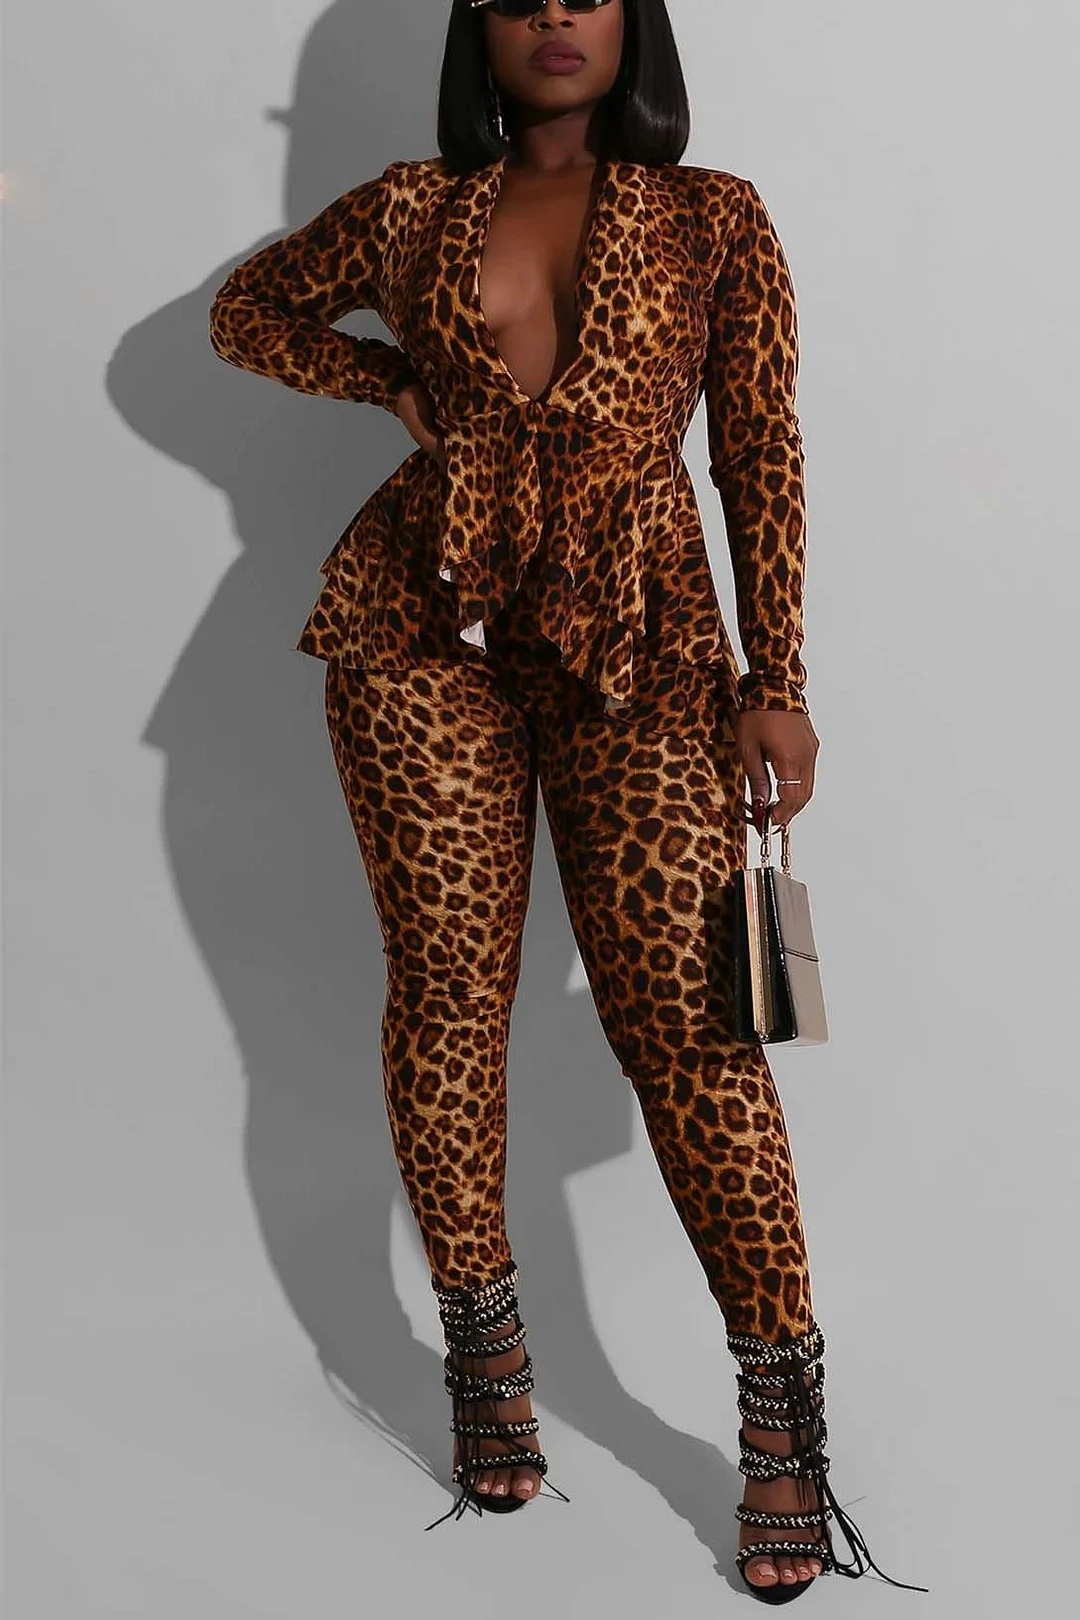 Leopard Printing Long Sleeve Pants Casual Set